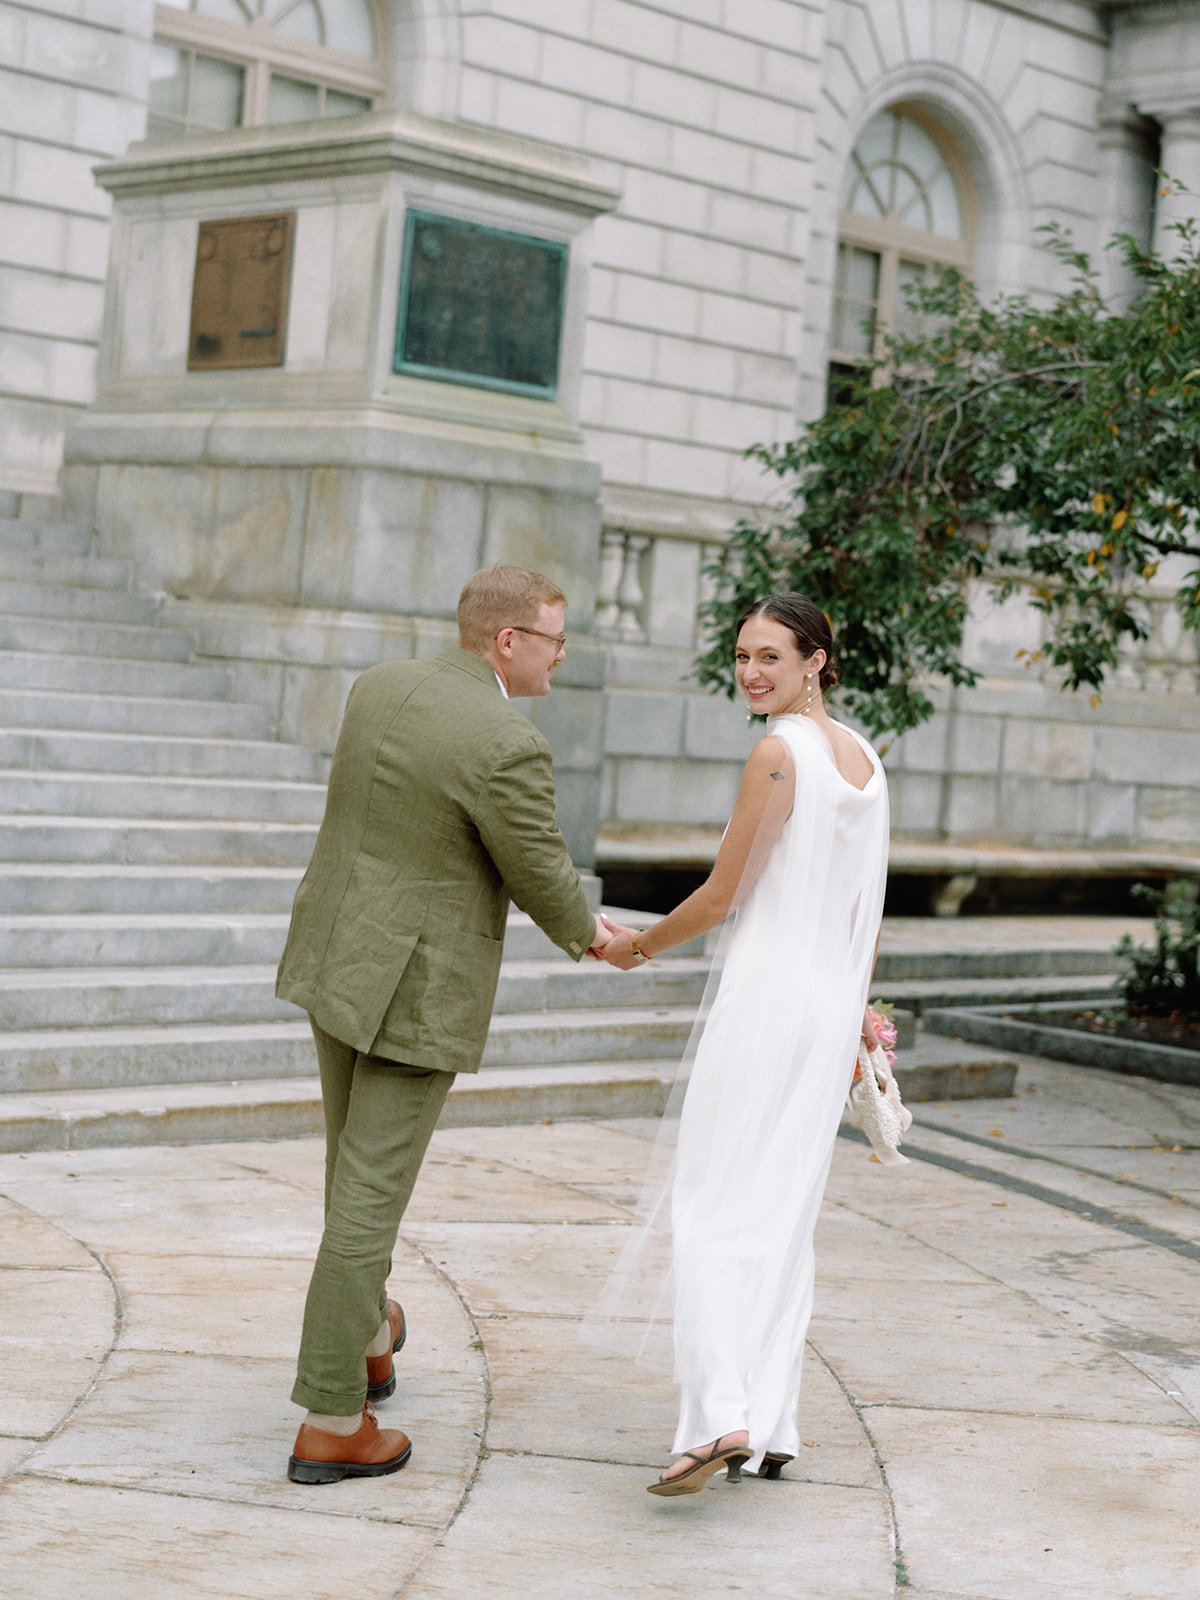 Best-Film-35mm-Austin-Wedding-Photographer-Portland-Maine-City-Hall-Super8-106.jpg